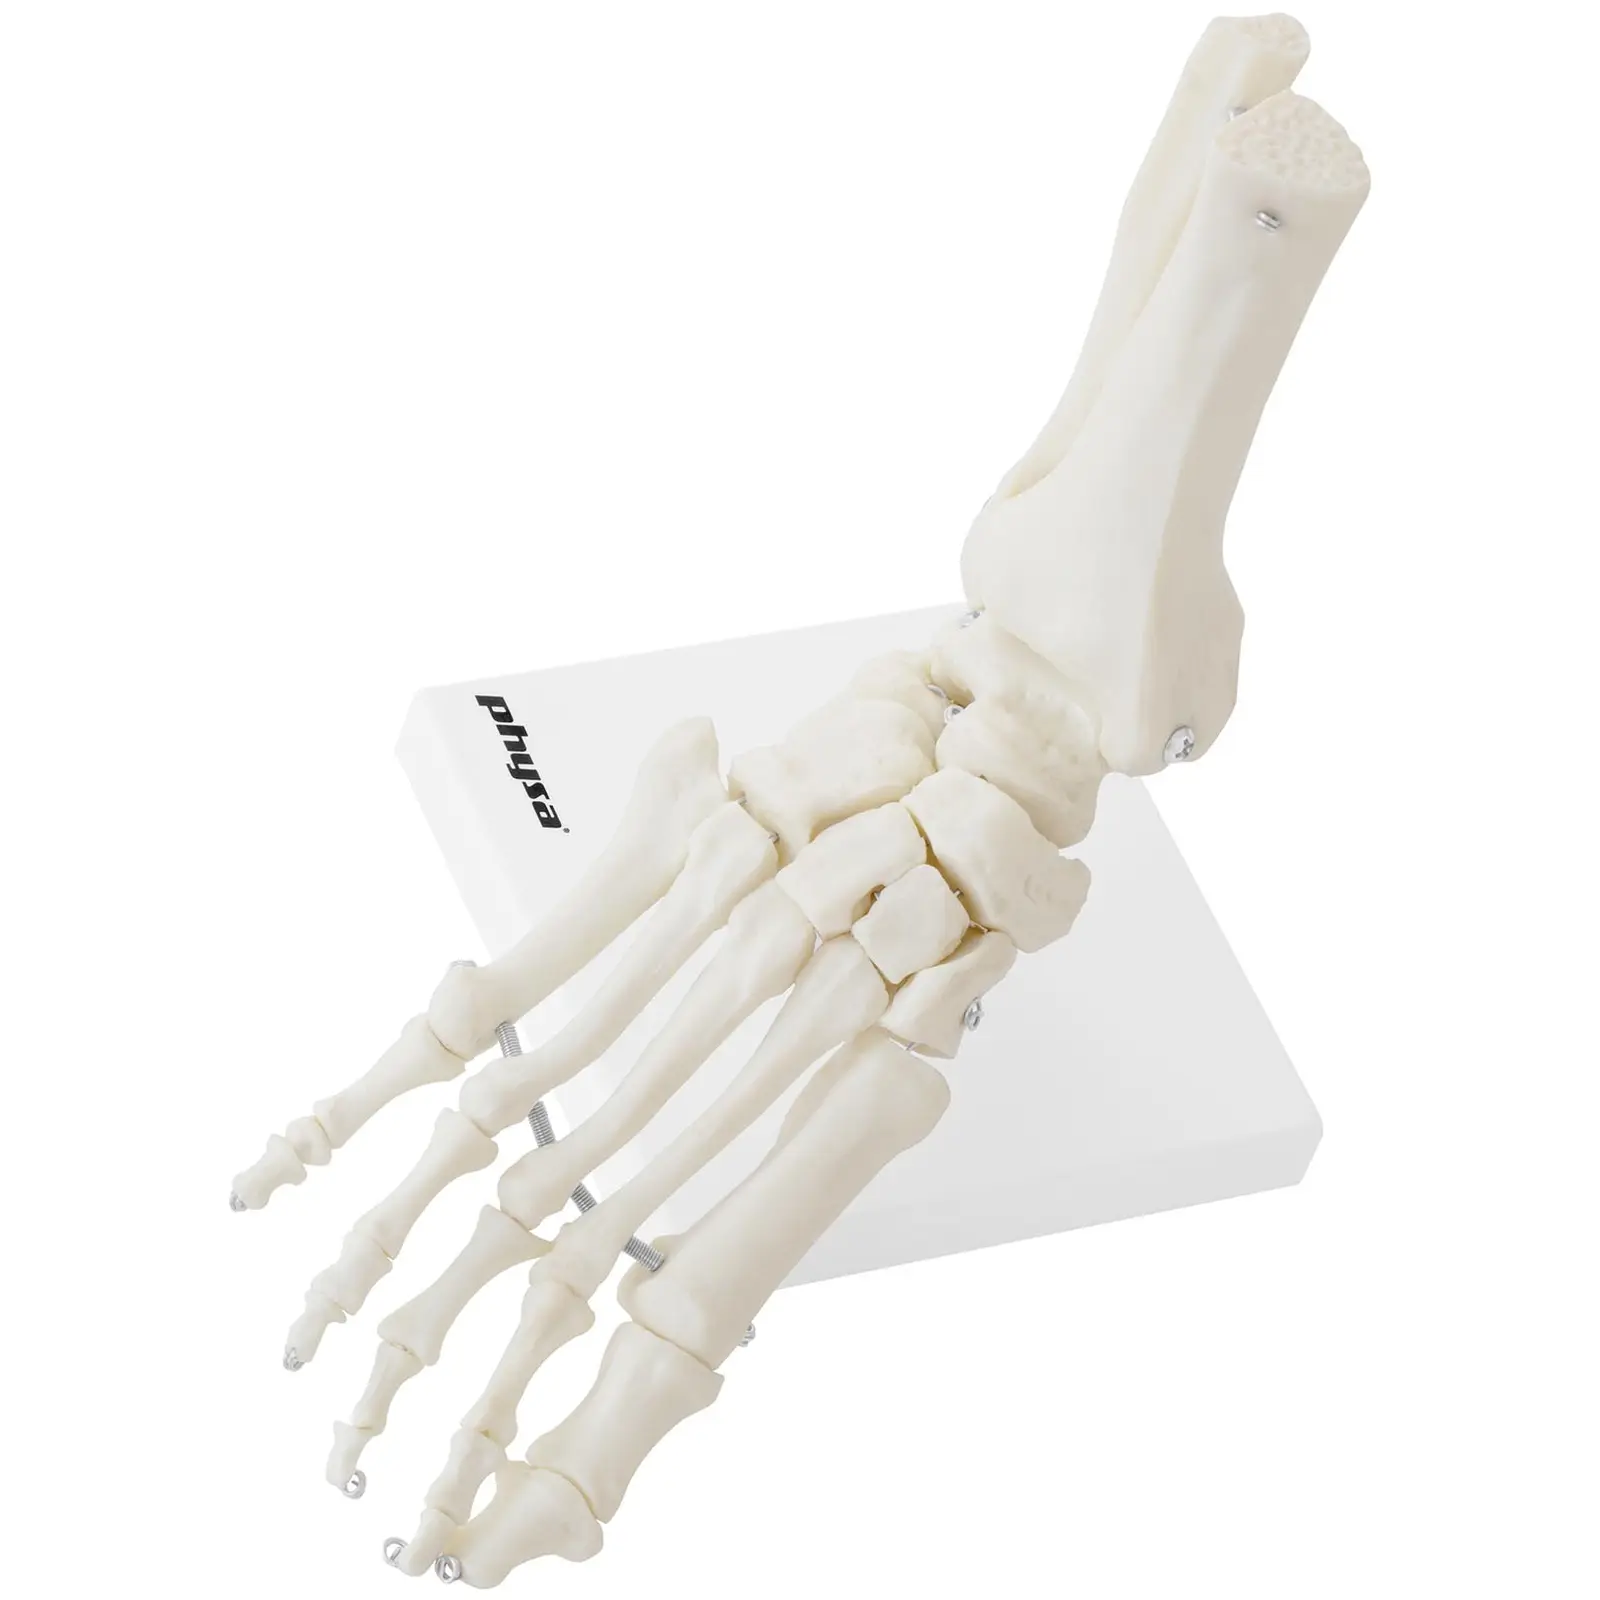 Maquette anatomique pied humain - 6